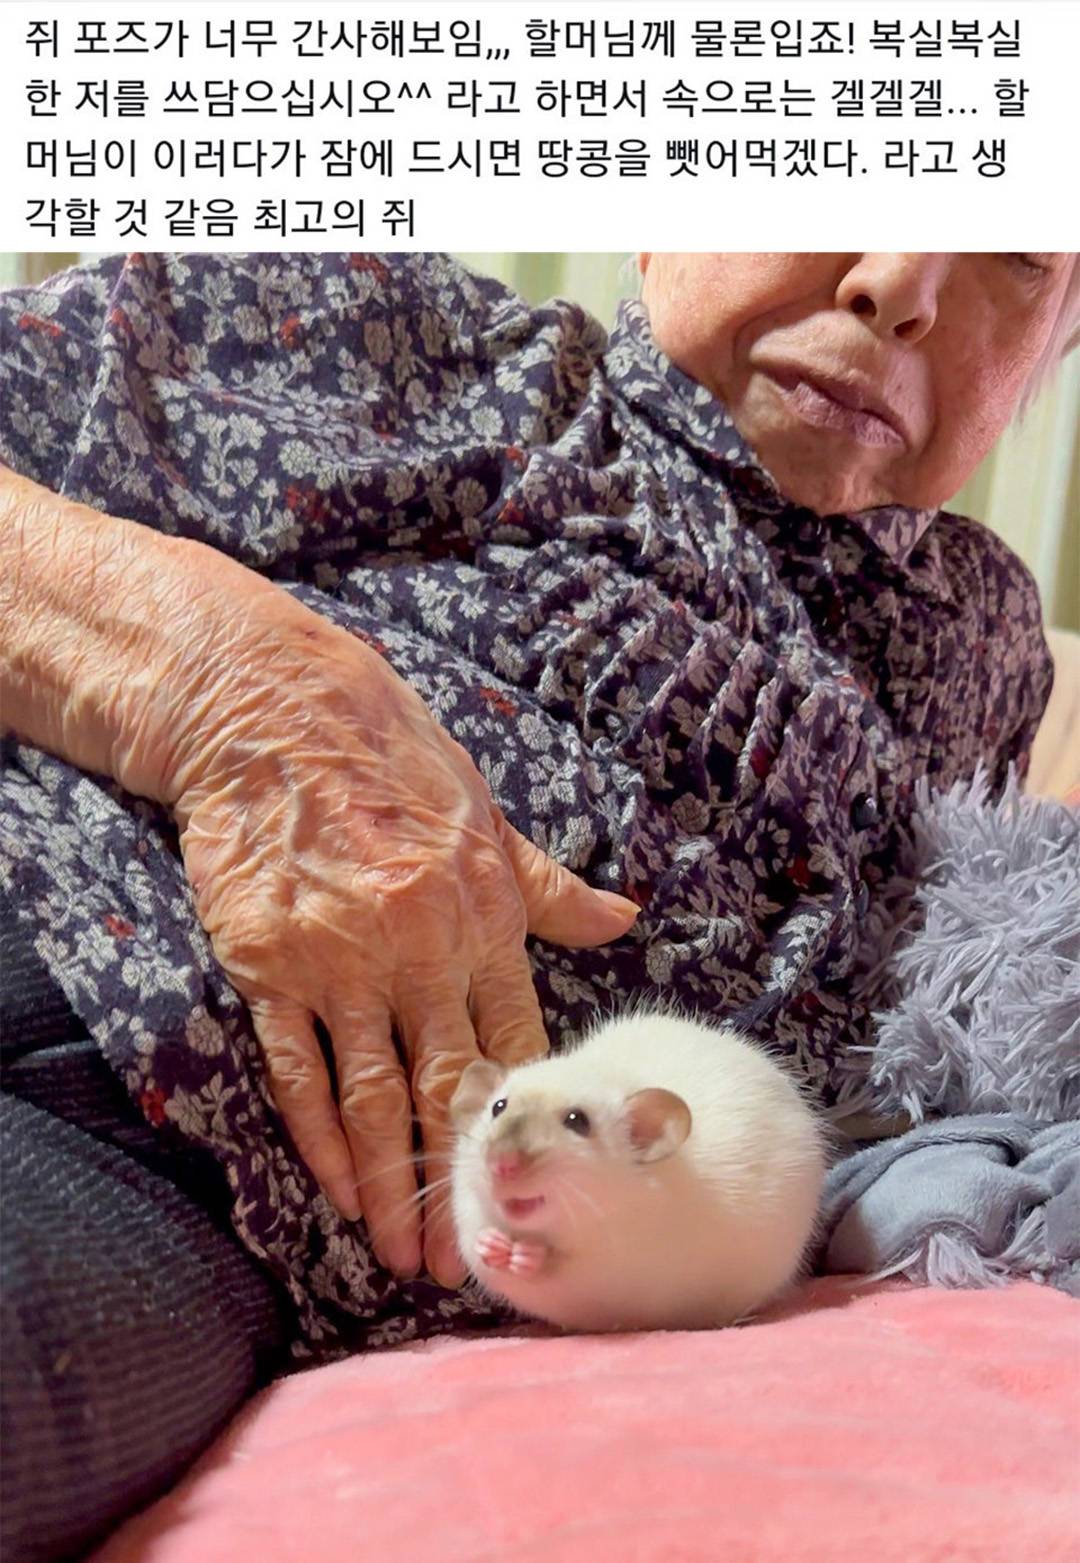 nokbeon.net-할머니 옆에 쥐 한마리-1번 이미지